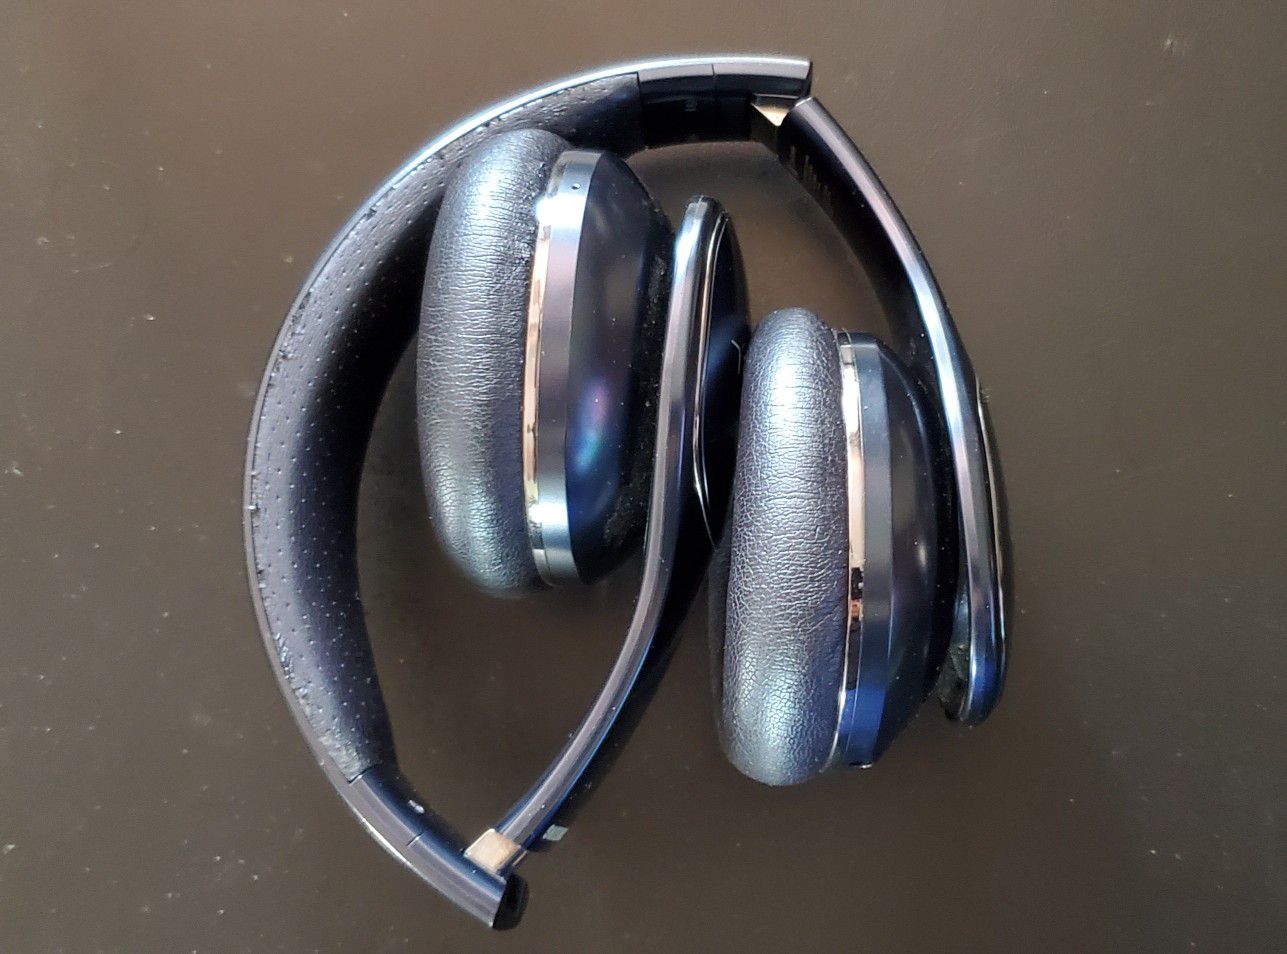 Samsung level headphones